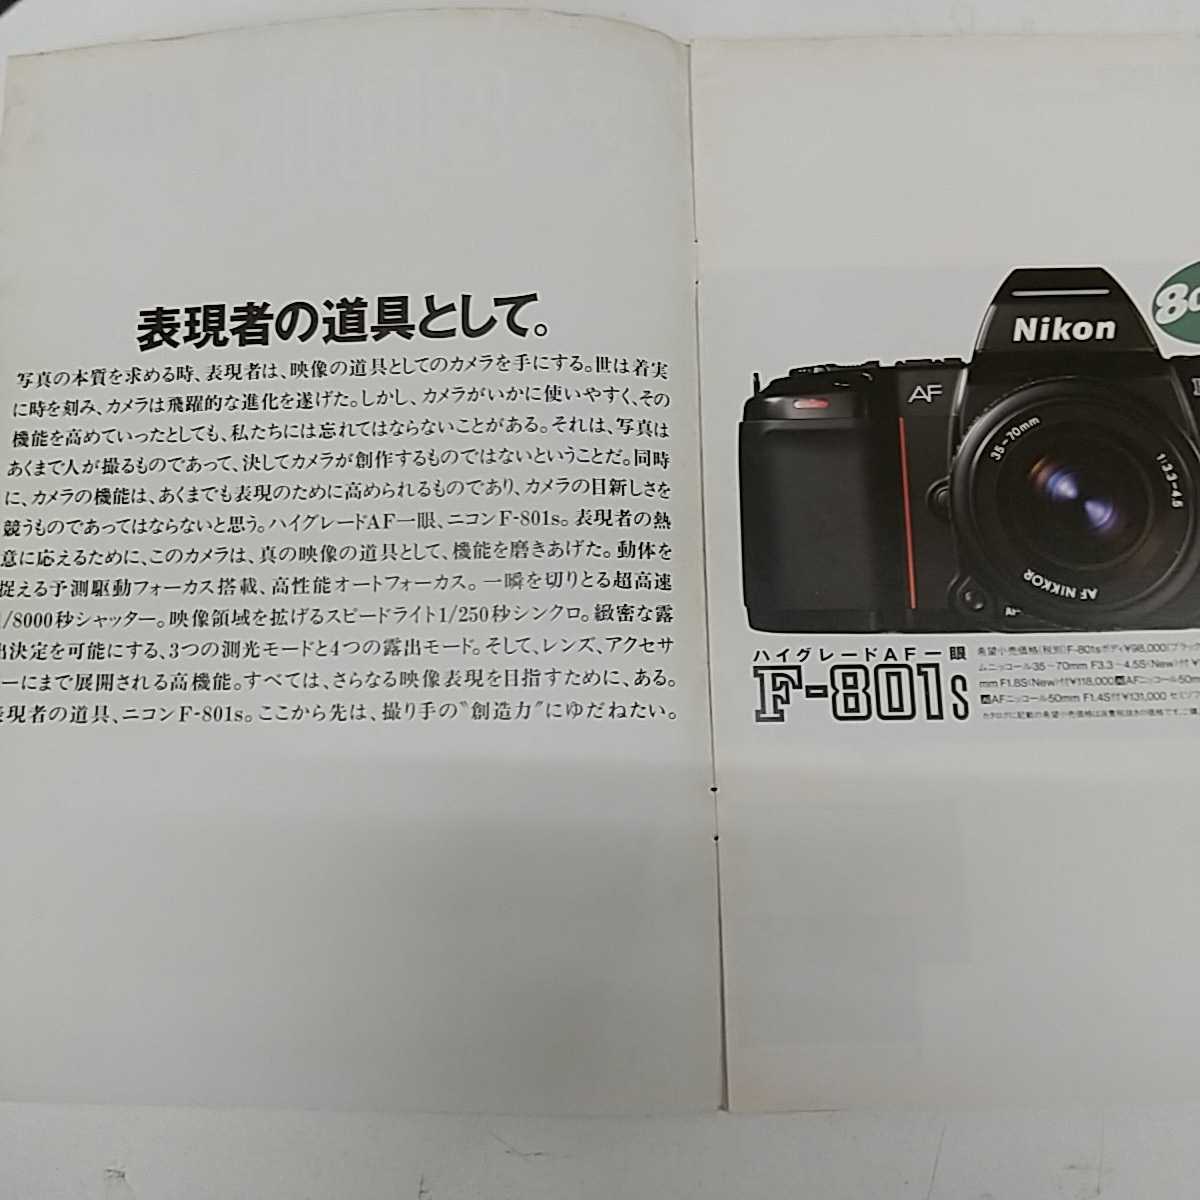 1-# Nikon catalog Nikon F-801s 1991 year 12 month 10 day camera general catalogue Vol.11 attaching 1989 year Showa Retro 